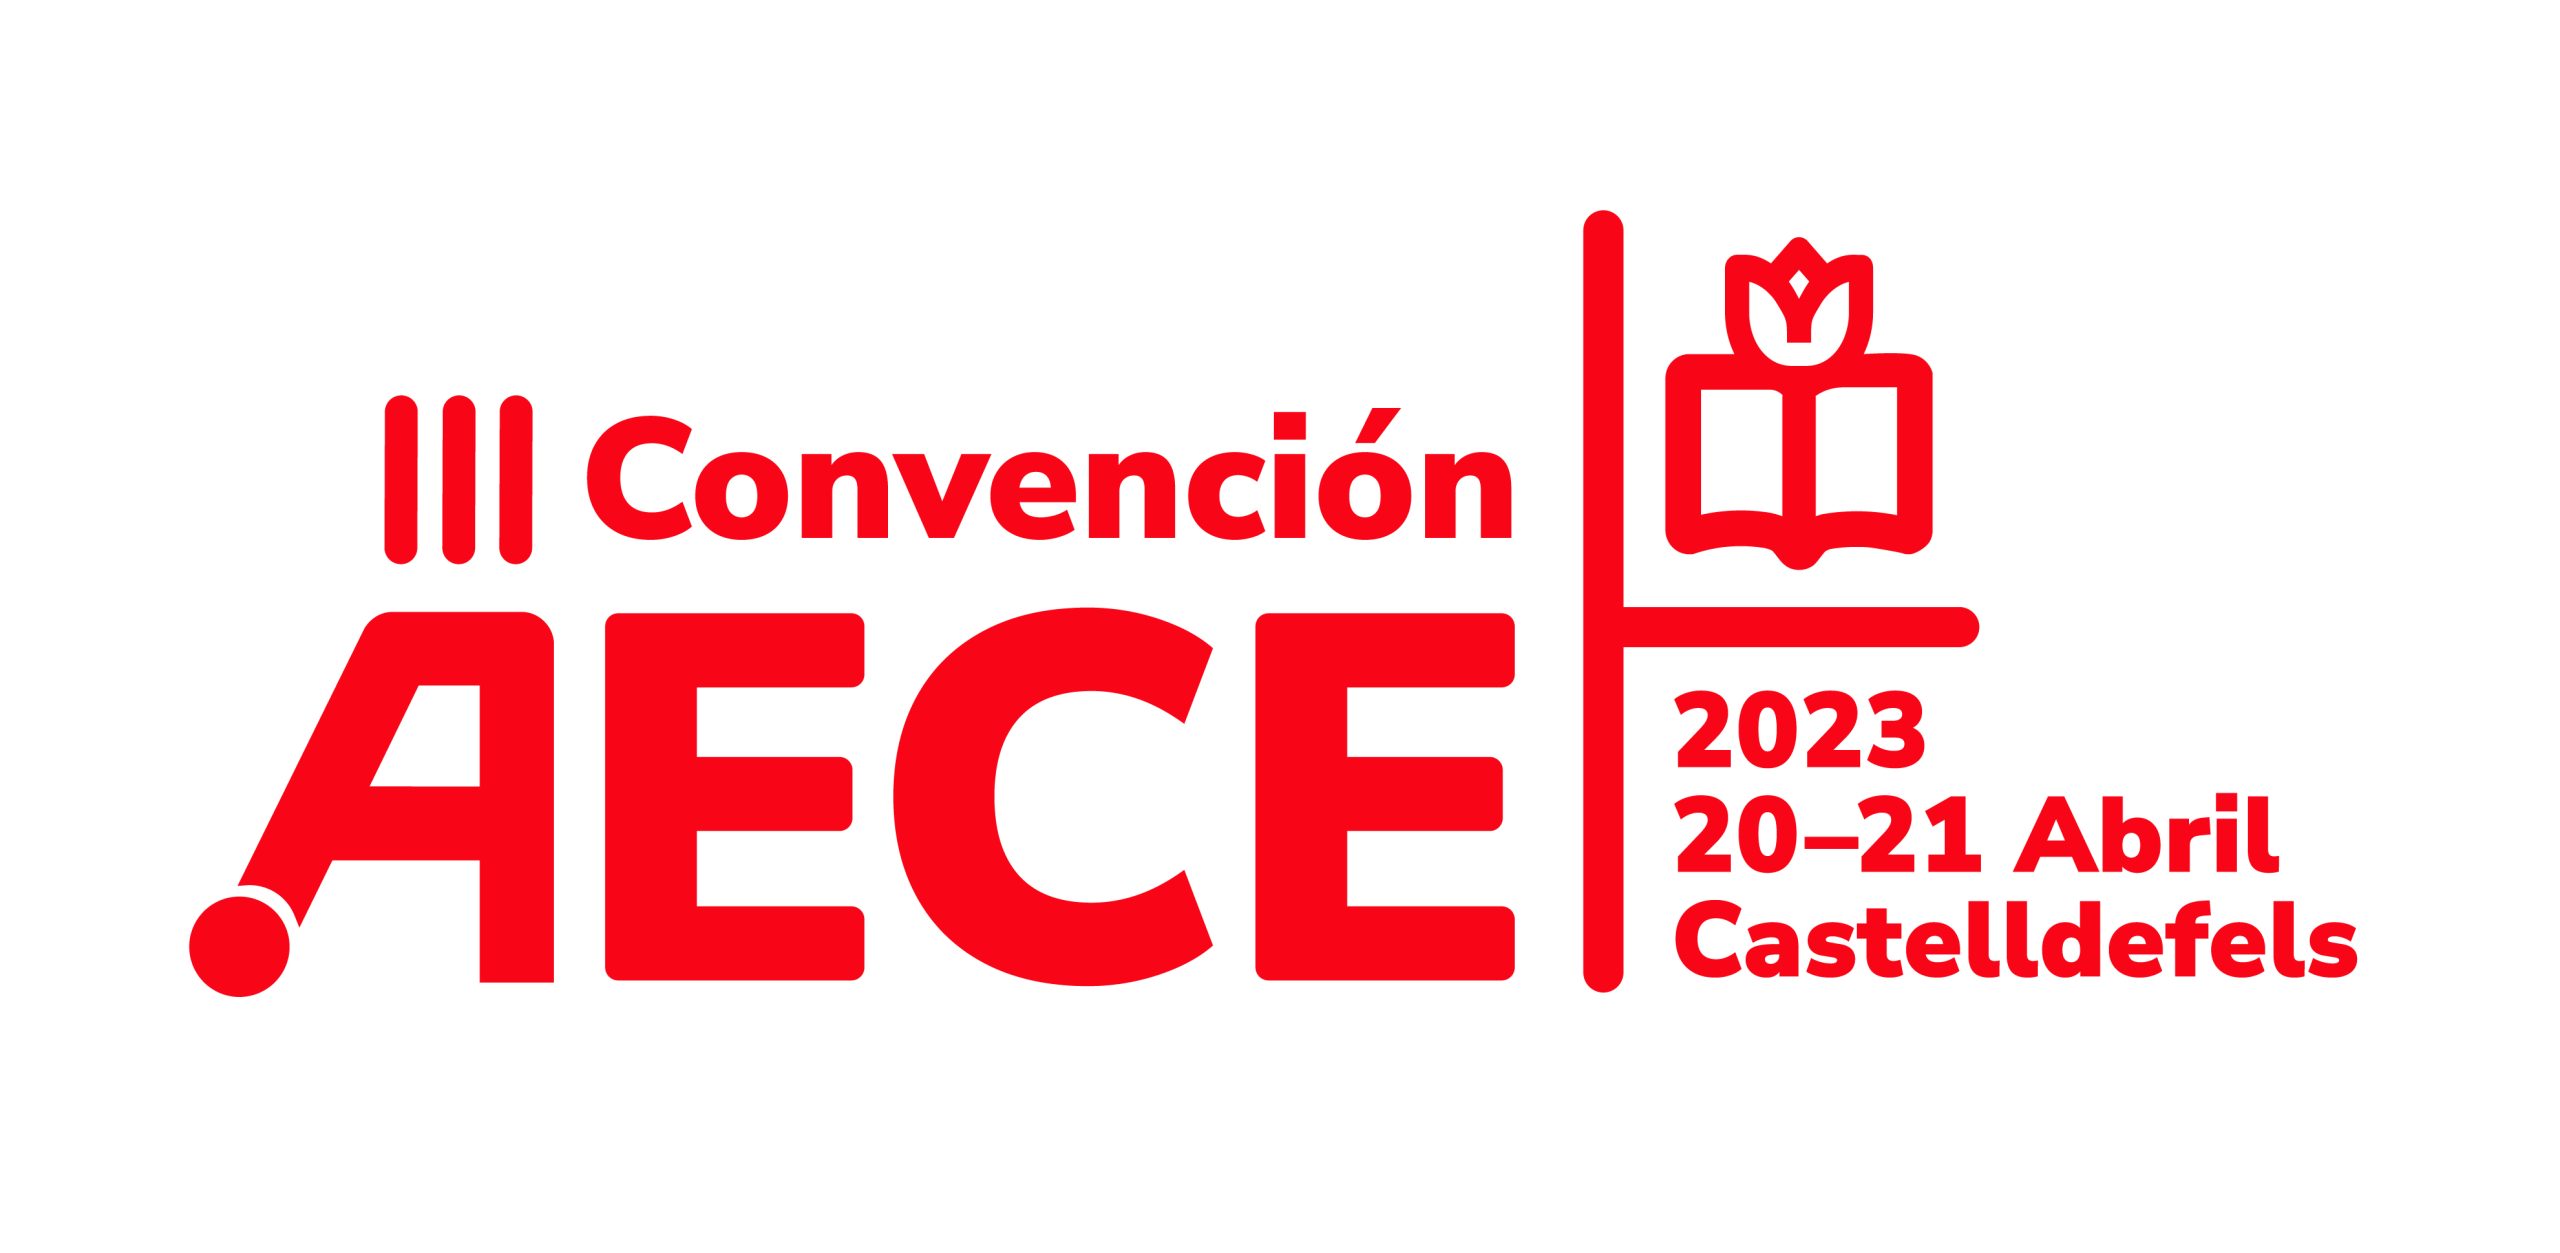 ConvencionAECE-2023FECHA_logoROJO